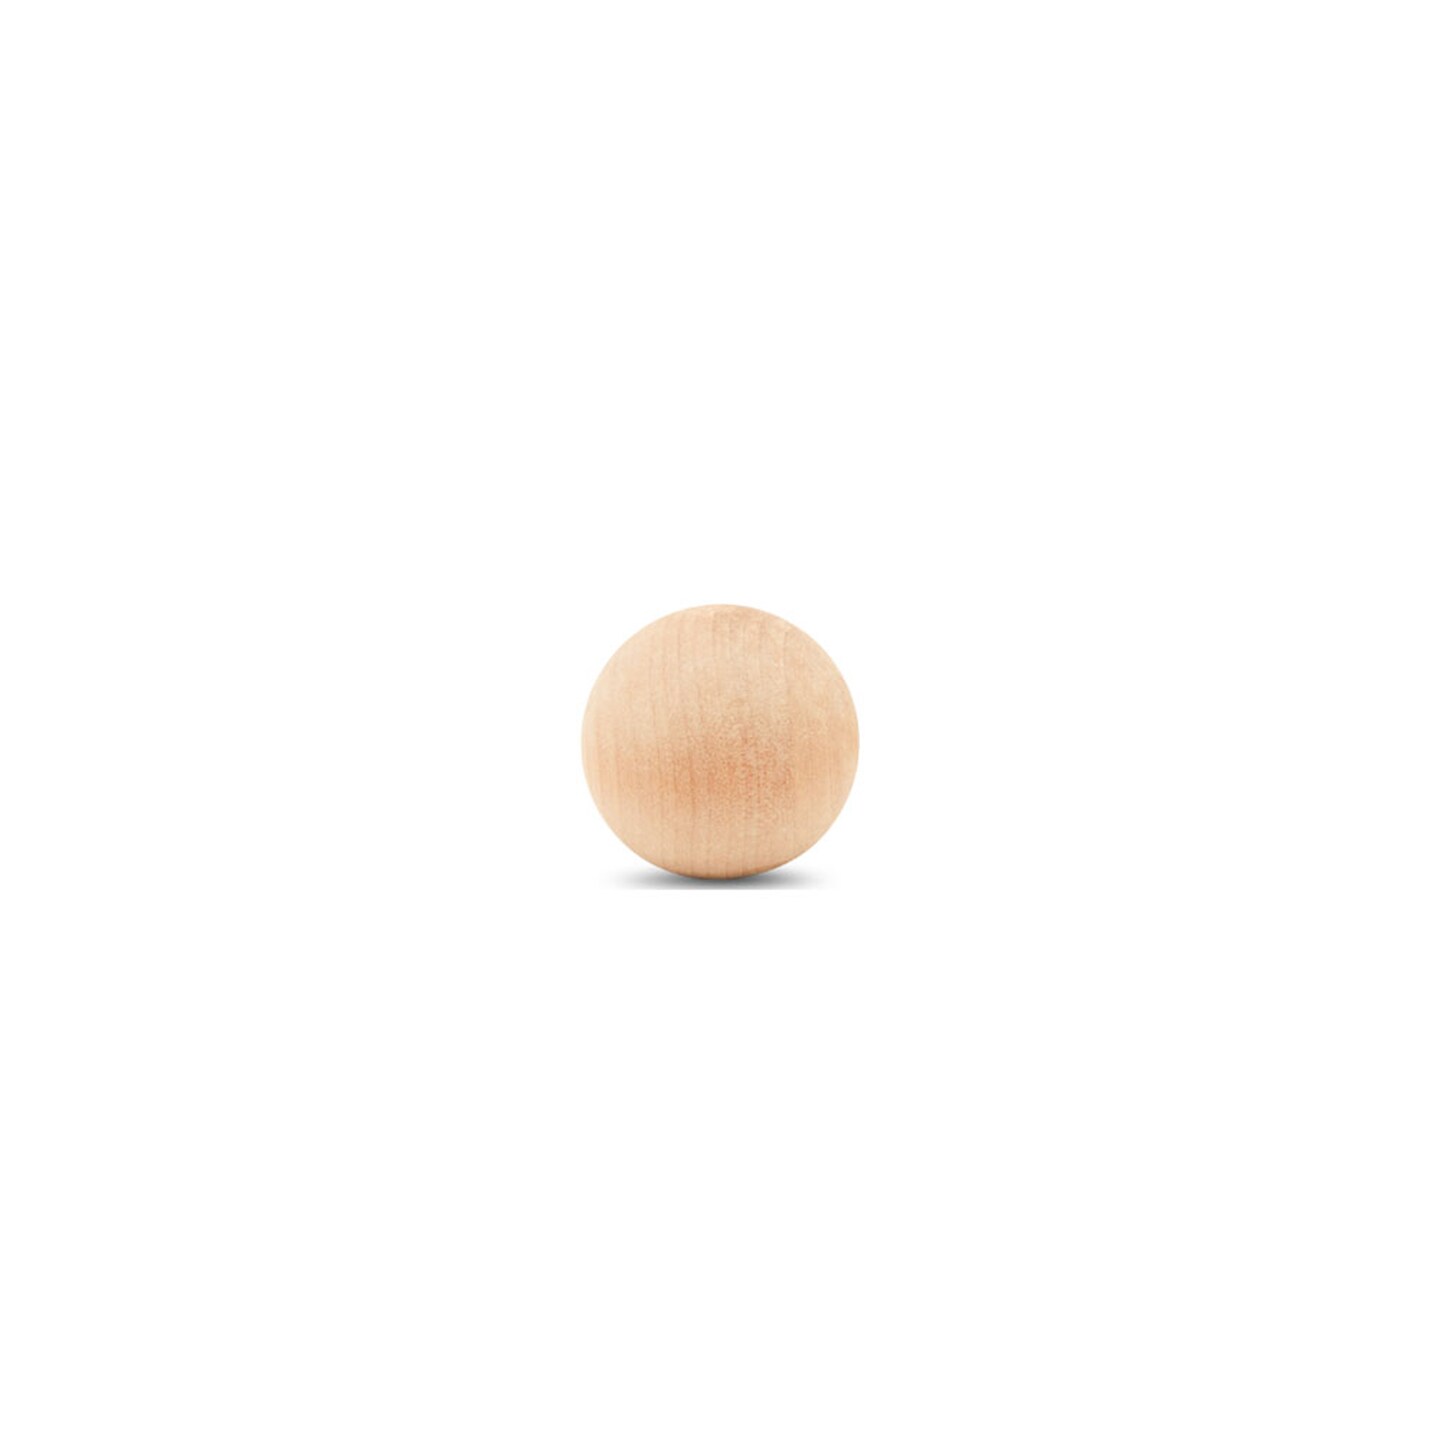 Wooden Balls 2-1/4 inch Unfinished, Round Birch Balls for Crafts, Woodpeckers